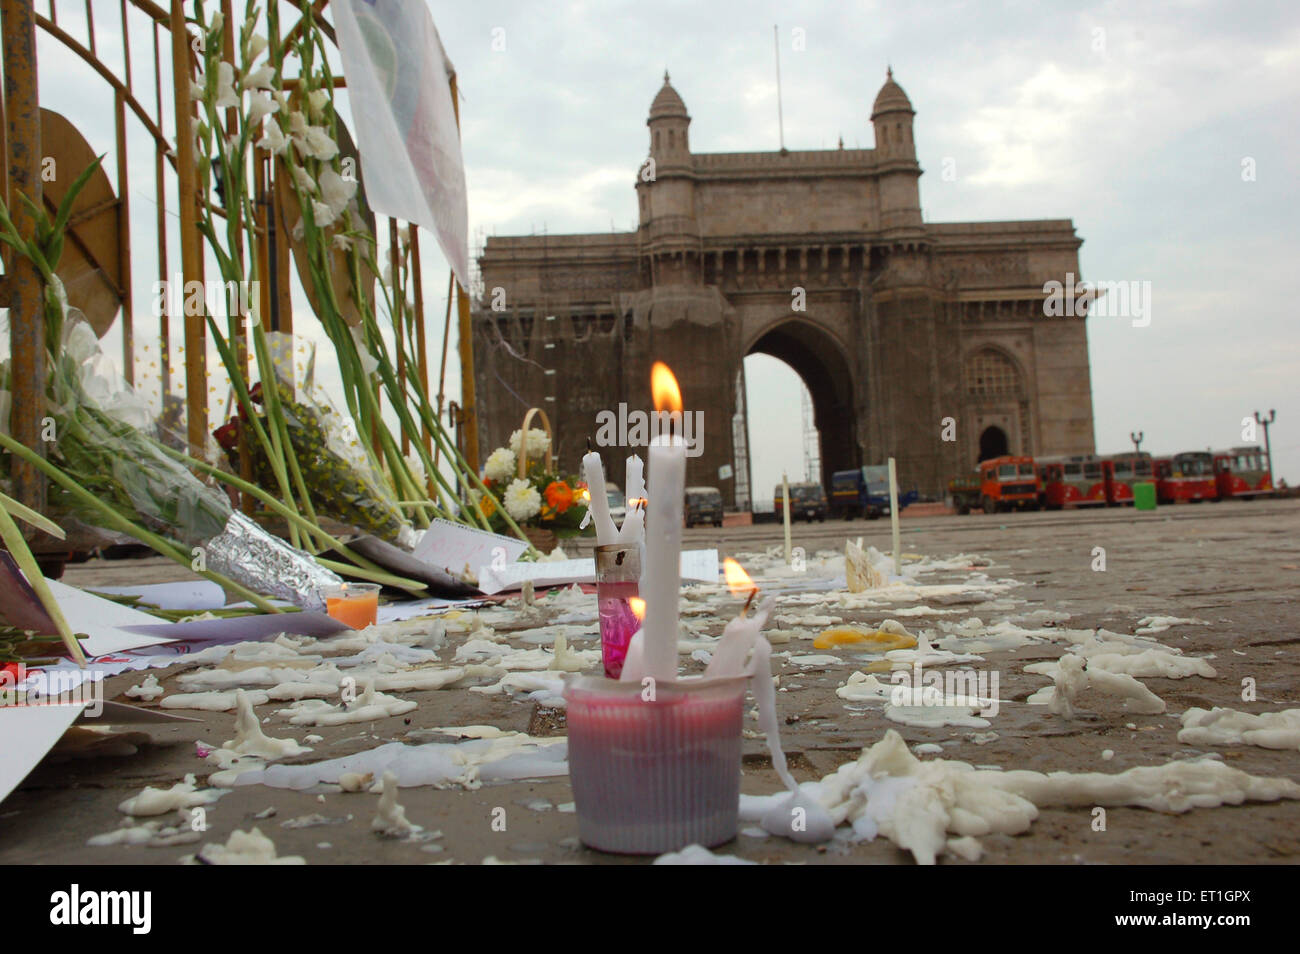 Protest candles flowers after terrorist attack, Gateway of India, Taj Mahal Hotel, Apollo Bundar, Colaba, Bombay, Mumbai, Maharashtra, India, Asia Stock Photo